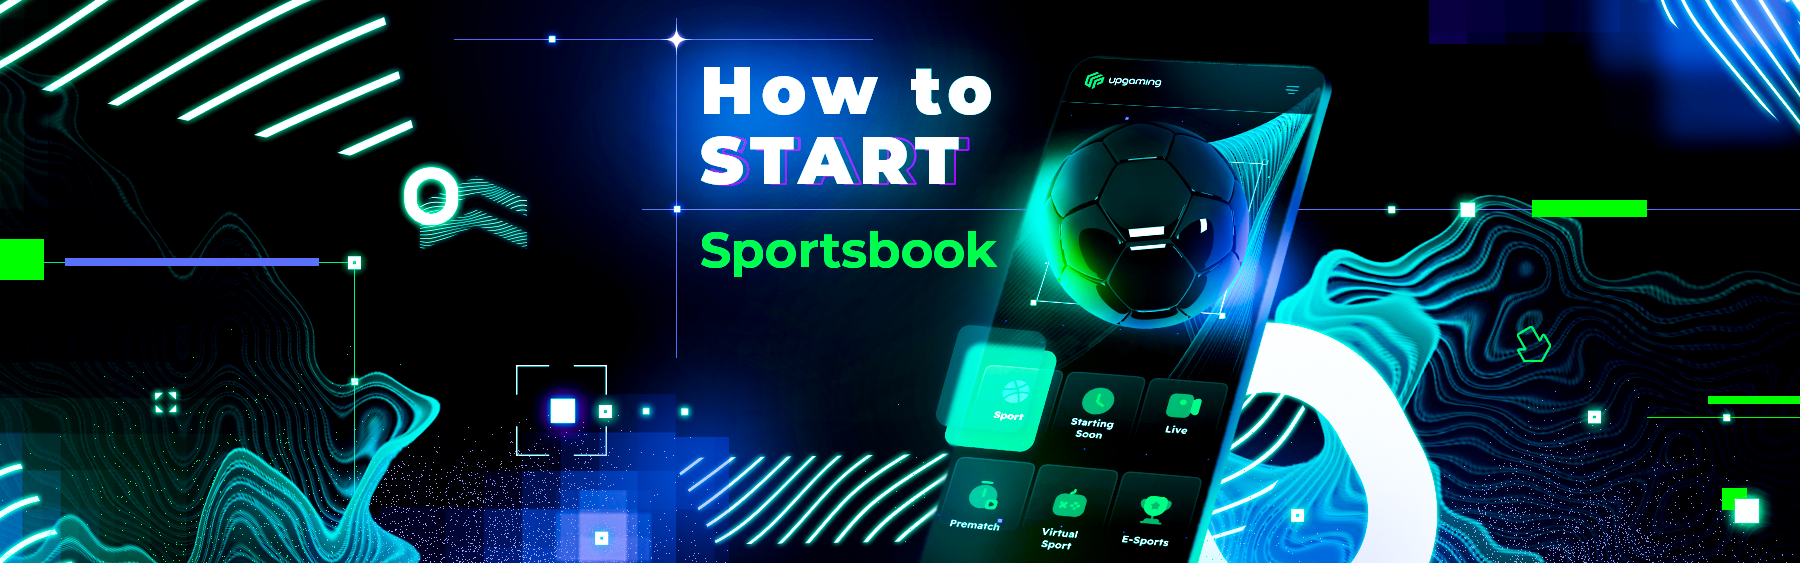 Sportsbook software